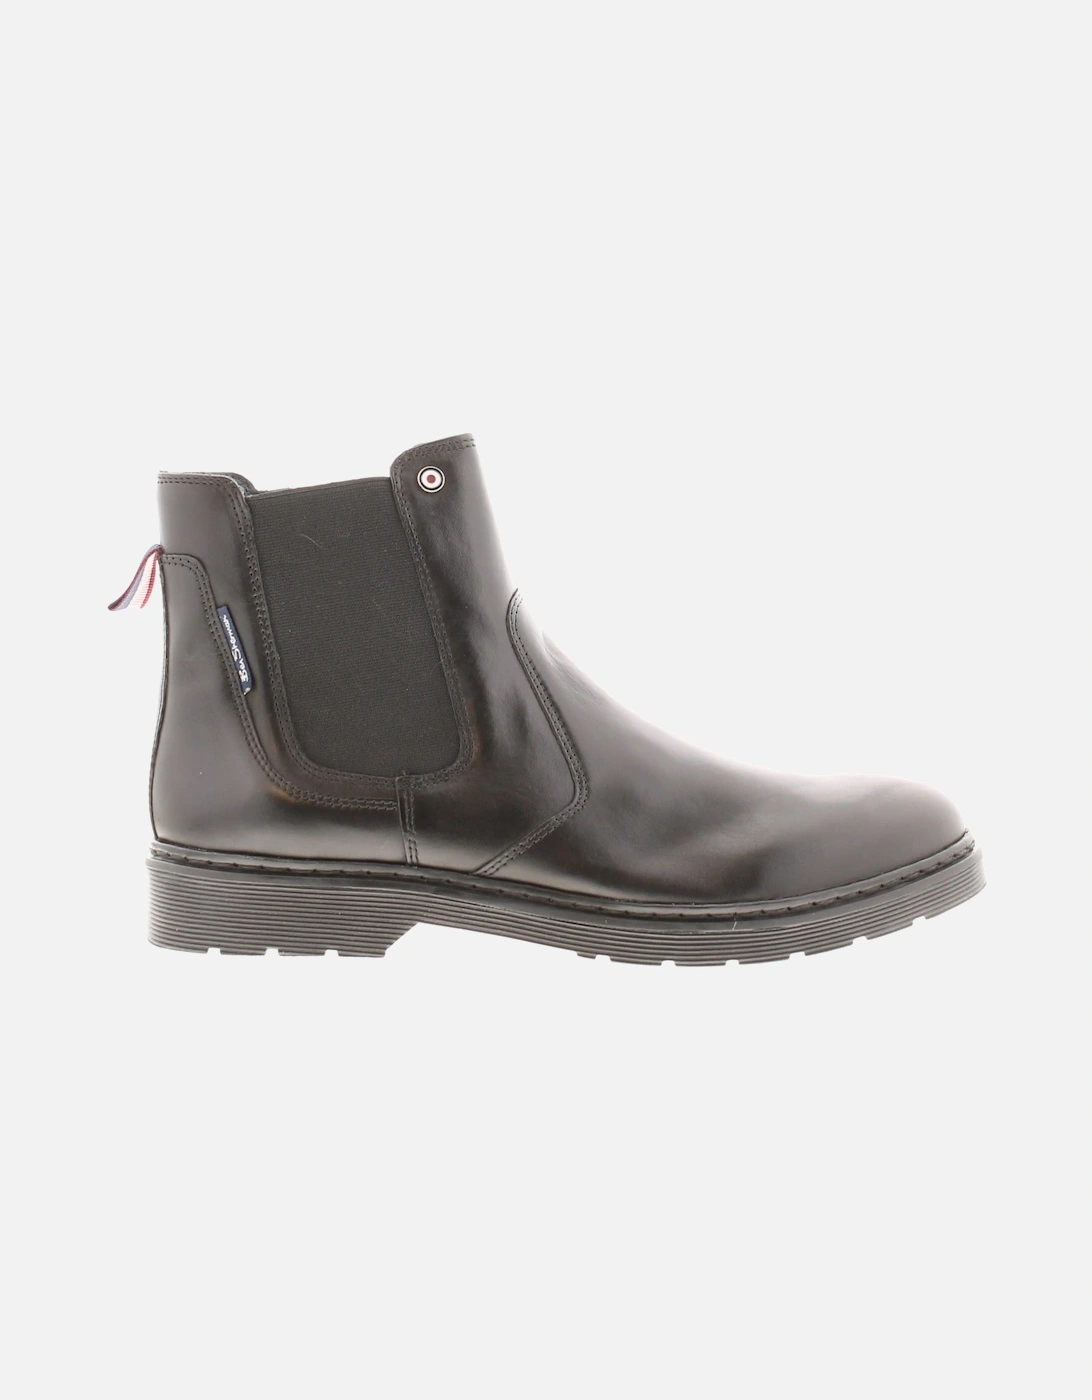 Mens Boots Smart Hampshire Leather black UK Size